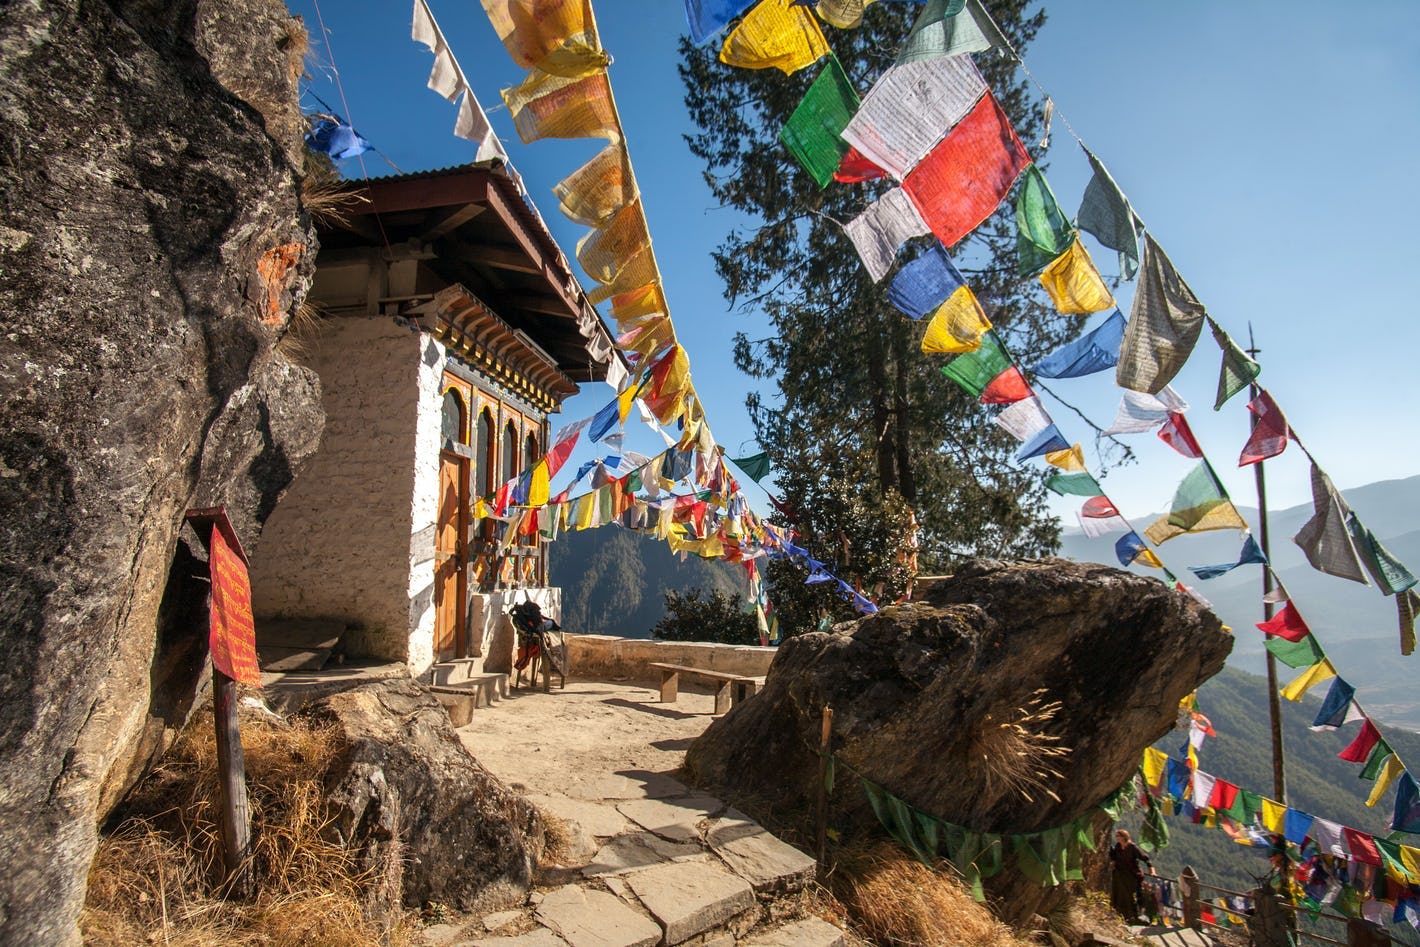 The Best Of India Bhutan In India, Asia G Adventures, 57% OFF